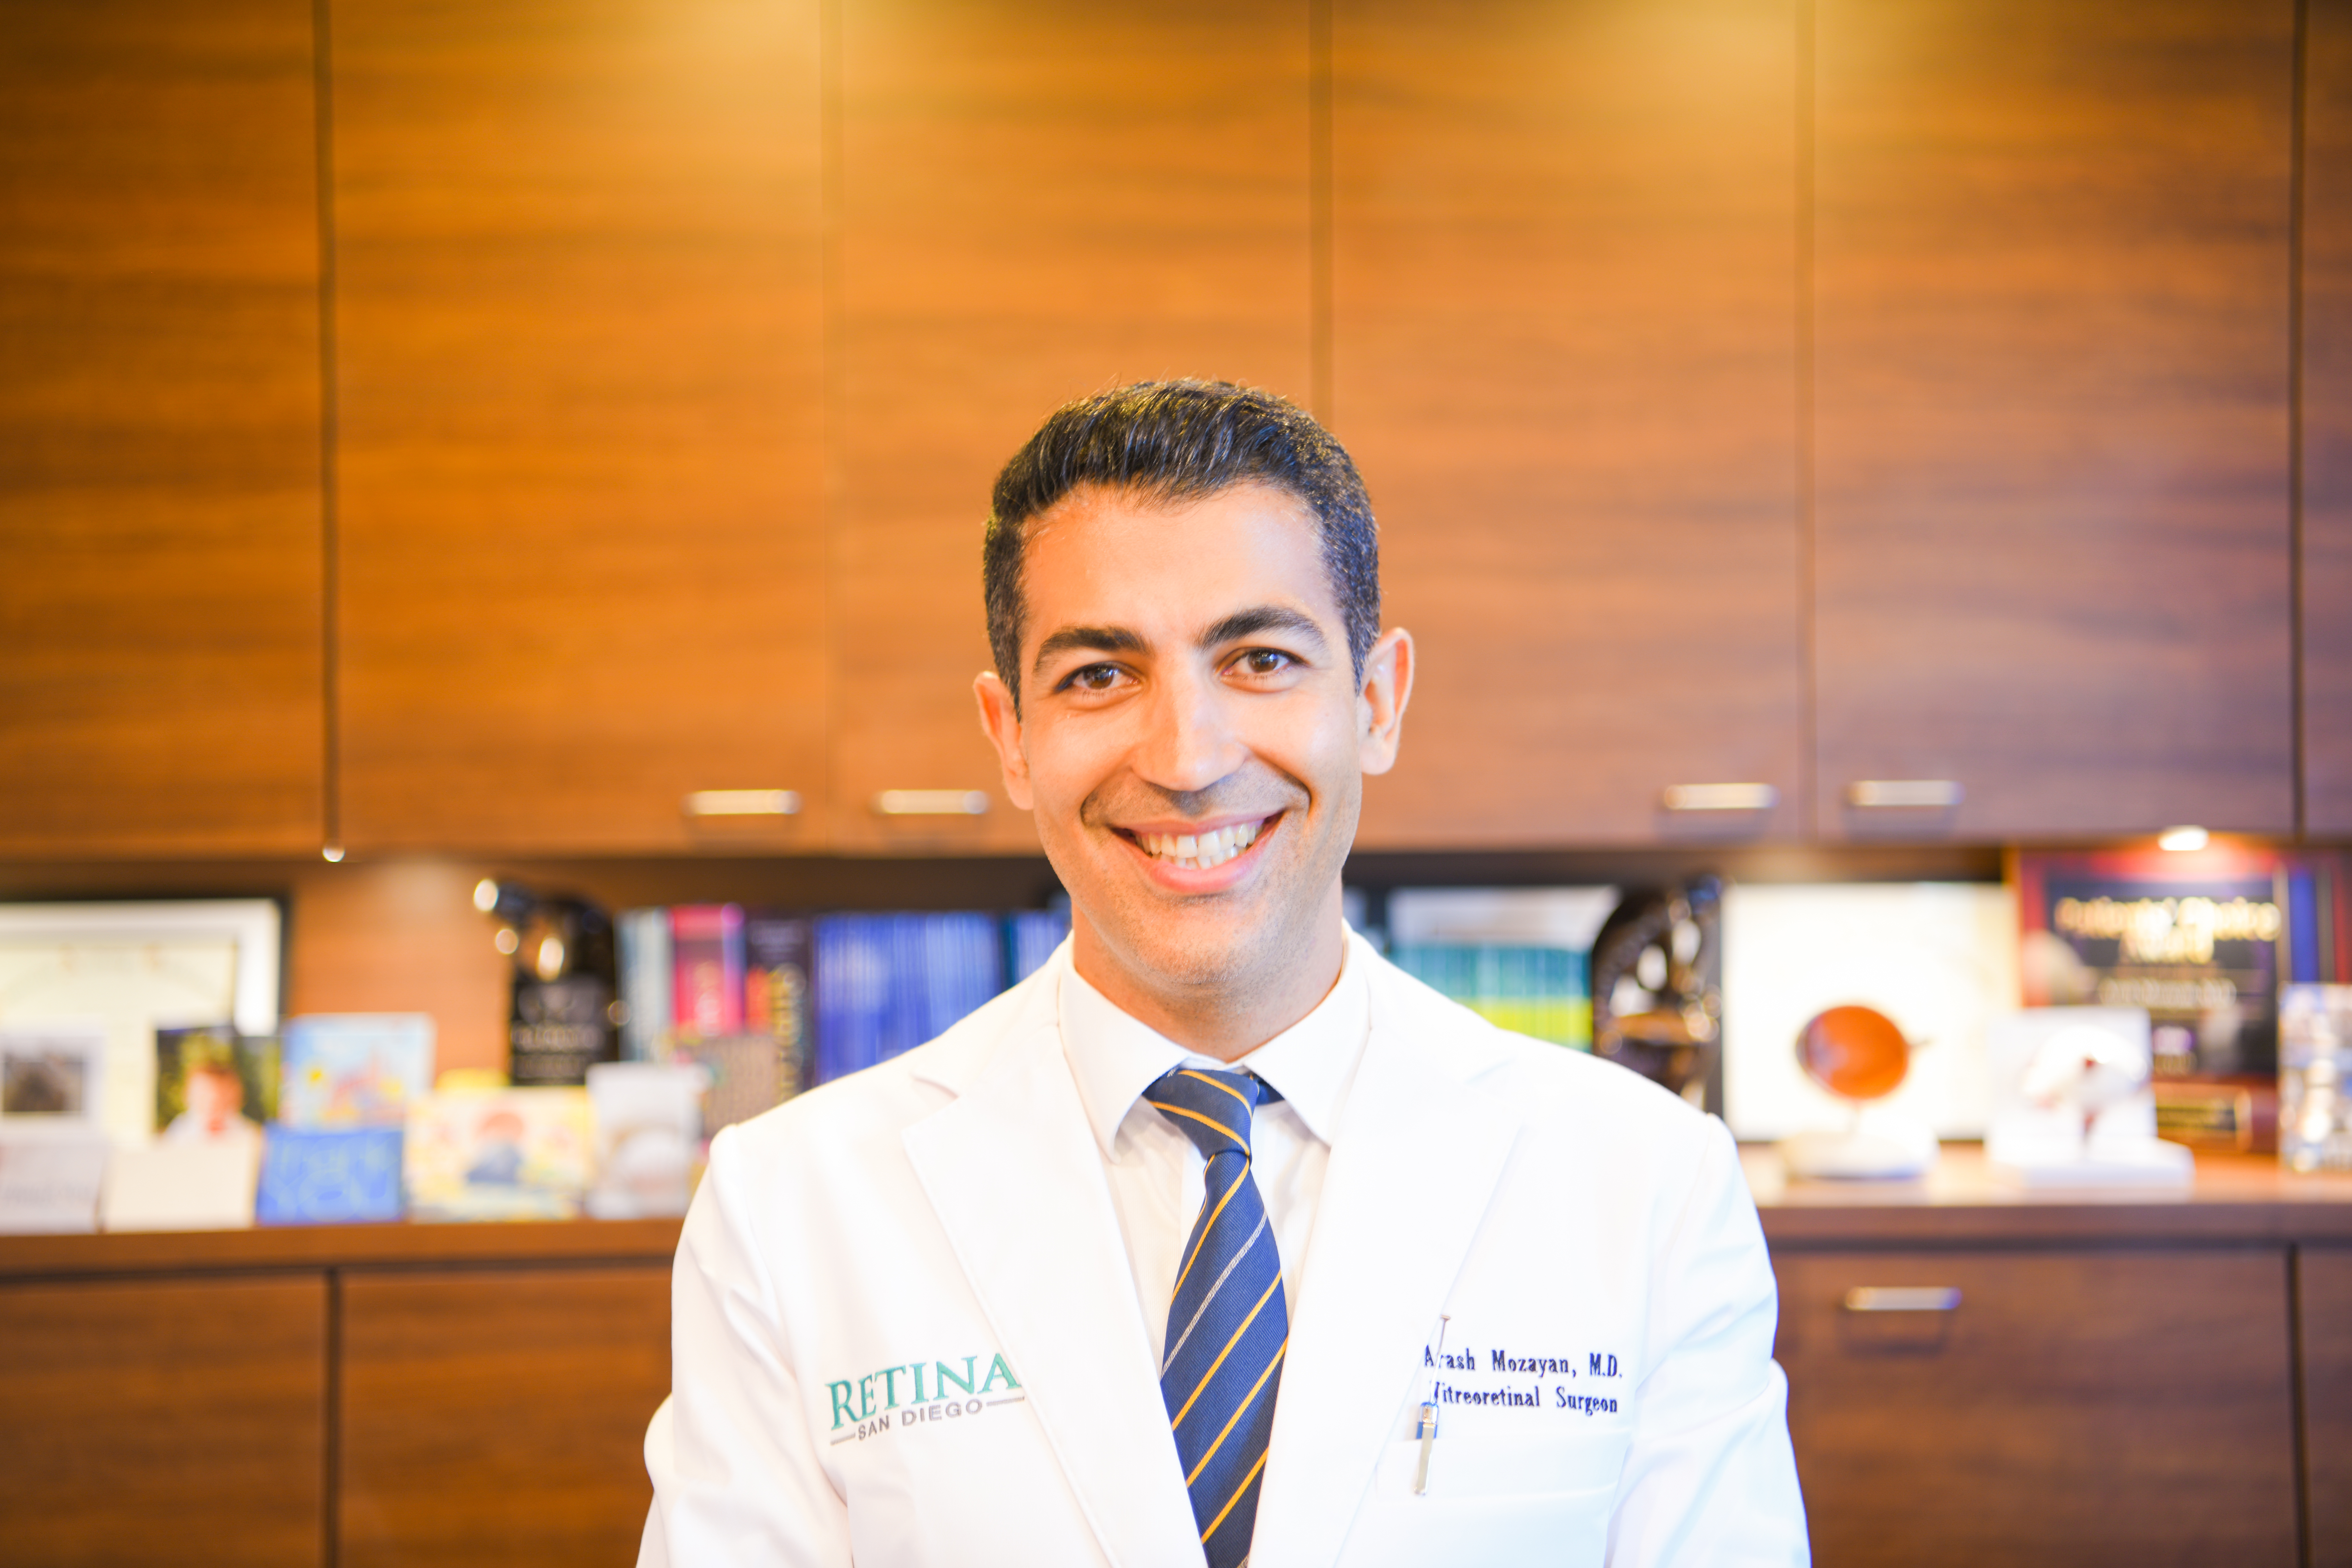 Arash Mozayan, M.D. Vitreoretinal Surgeon